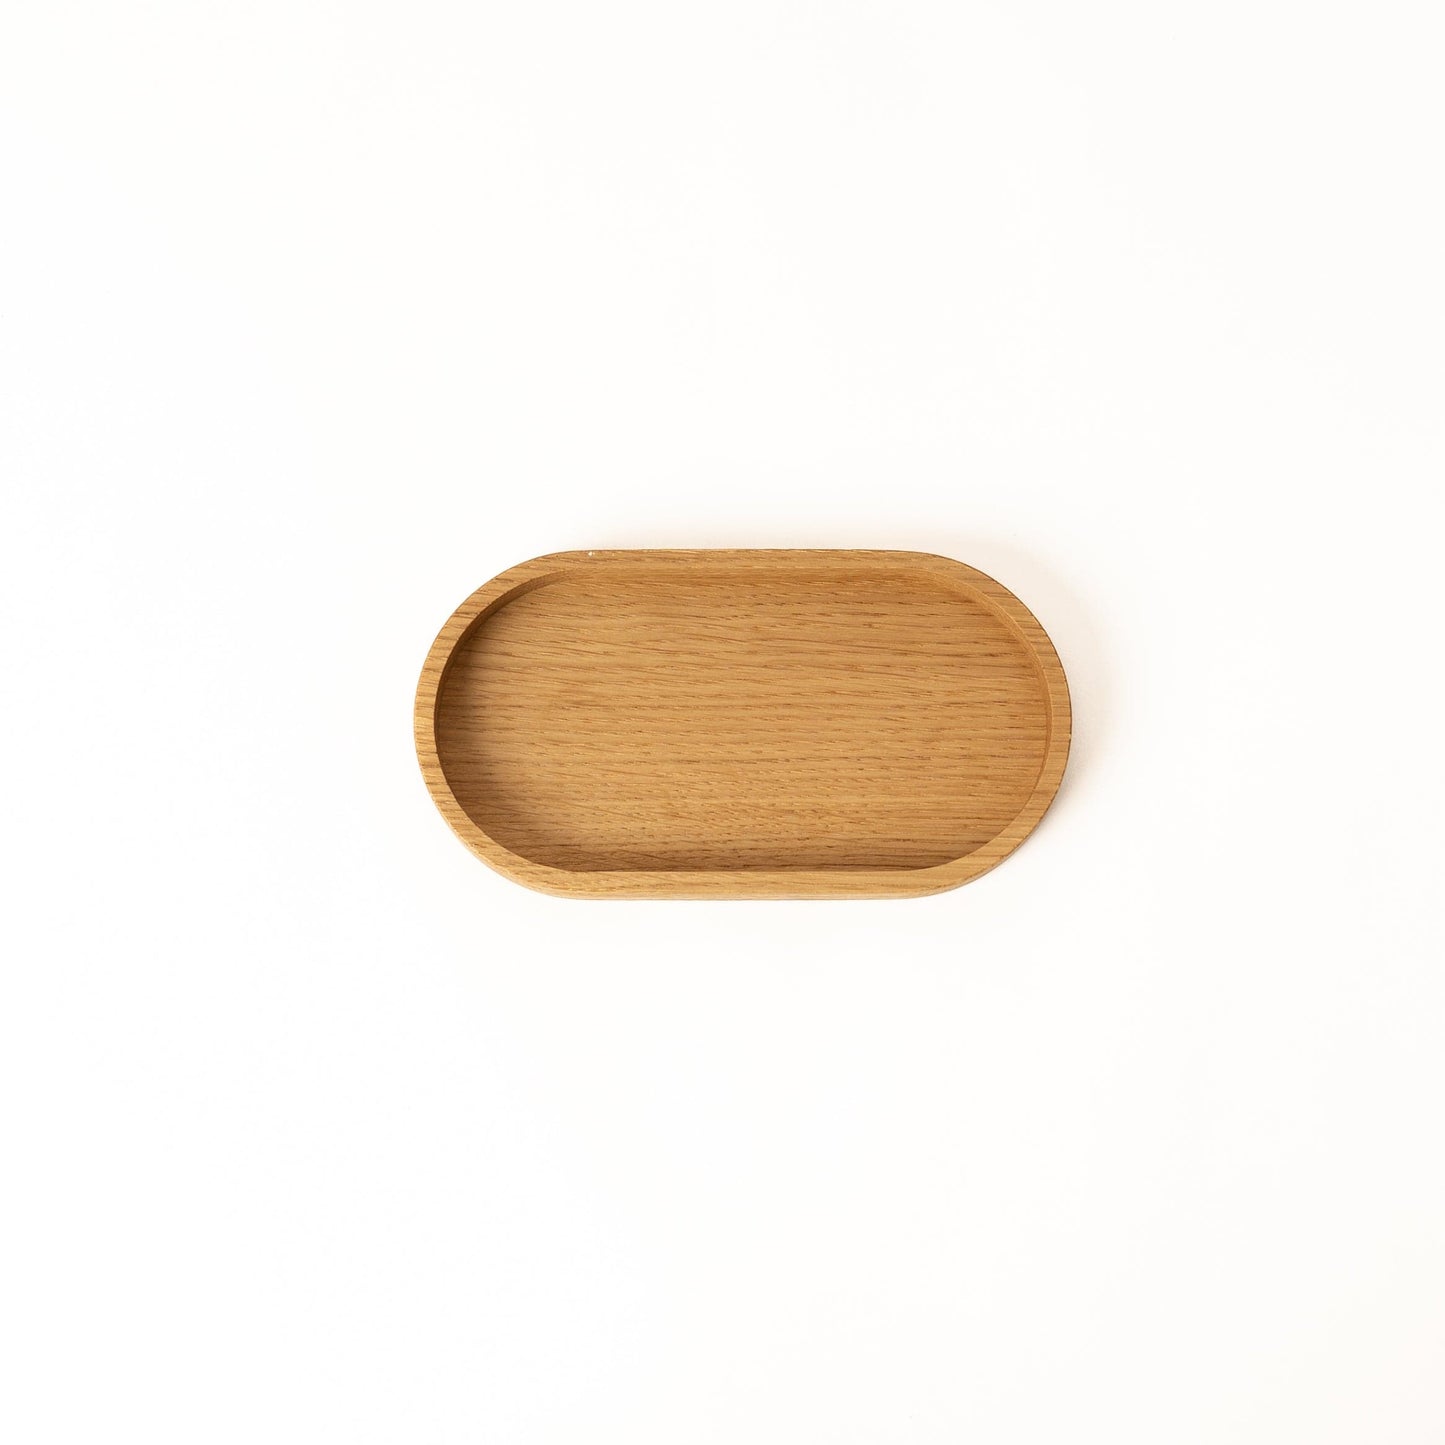 Holzmanufaktur Deko Tablett oval - Edle Geschenke aus Holz Eiche massiv